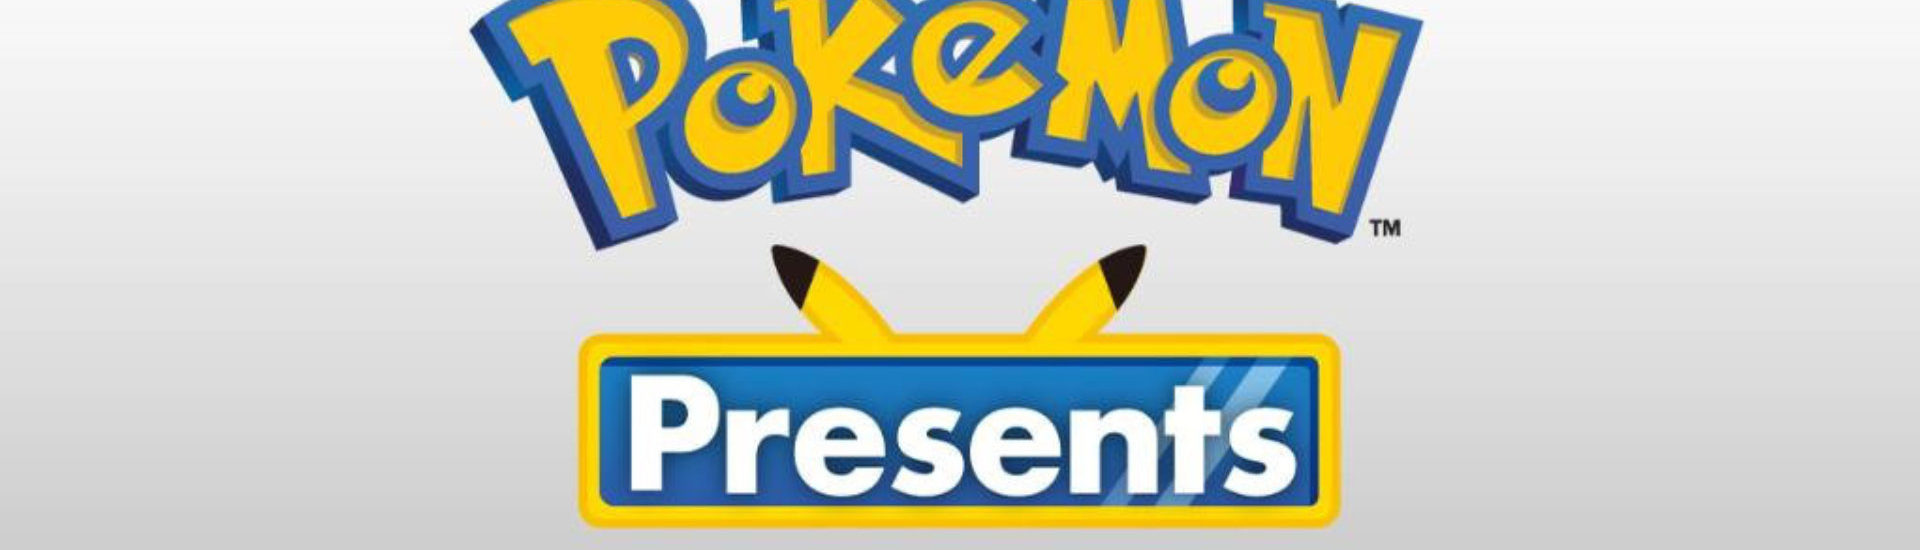 Pokémon Present: Pokémon Karmesin / Purpur-Stream zeigt neue Infos